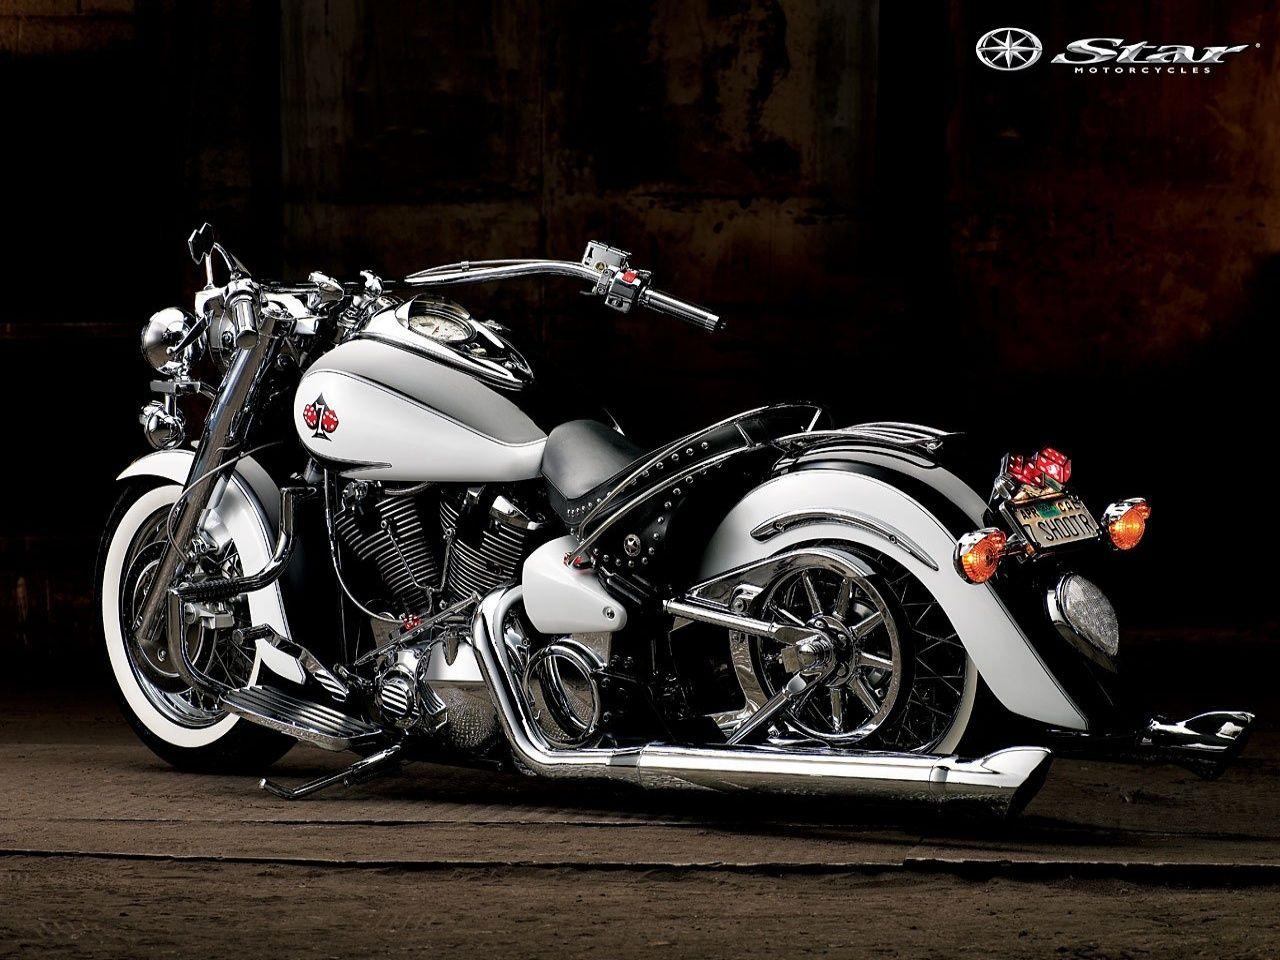 Full HD 1080p, Best HD Motorcycles Wallpaper, BsnSCB